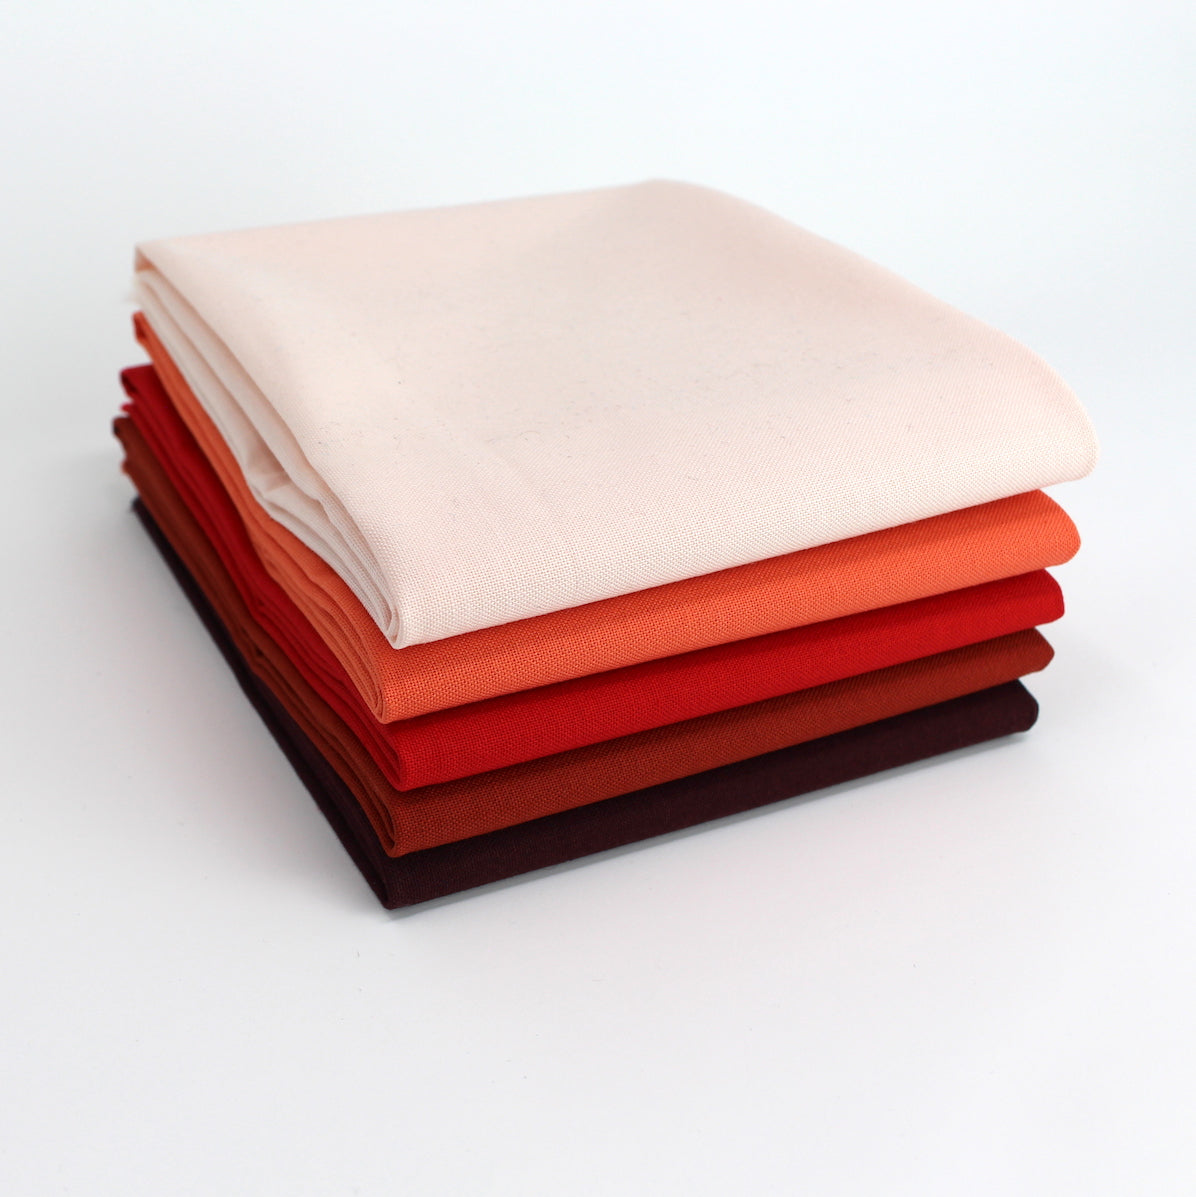 Red Fabric Bundle